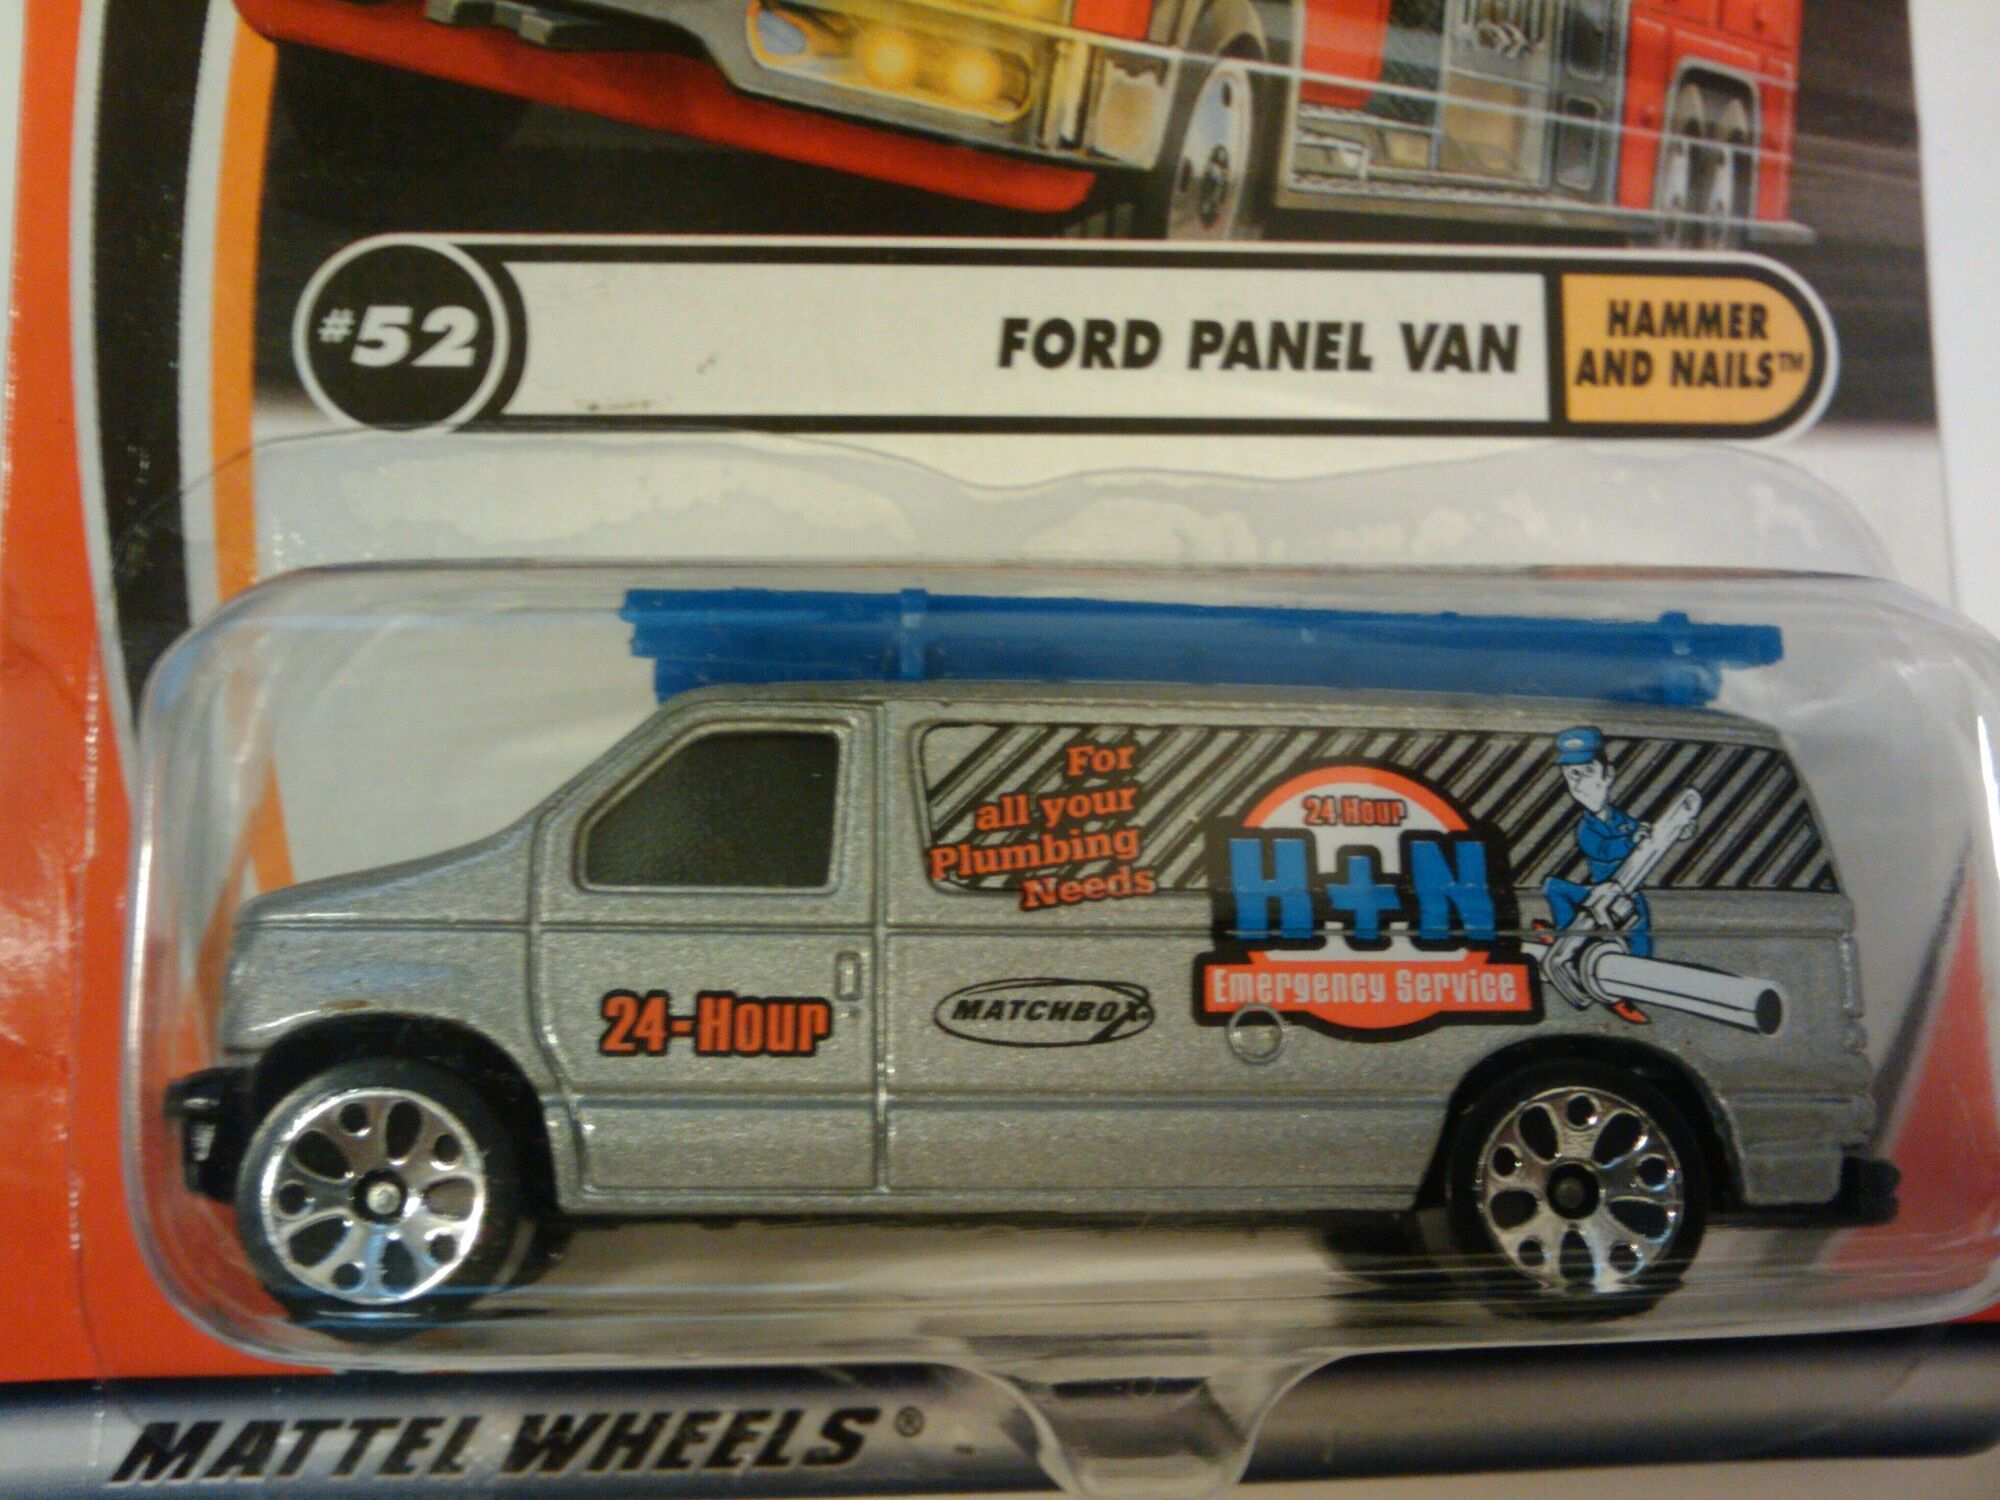 Ford Panel Van | Matchbox Cars Wiki 